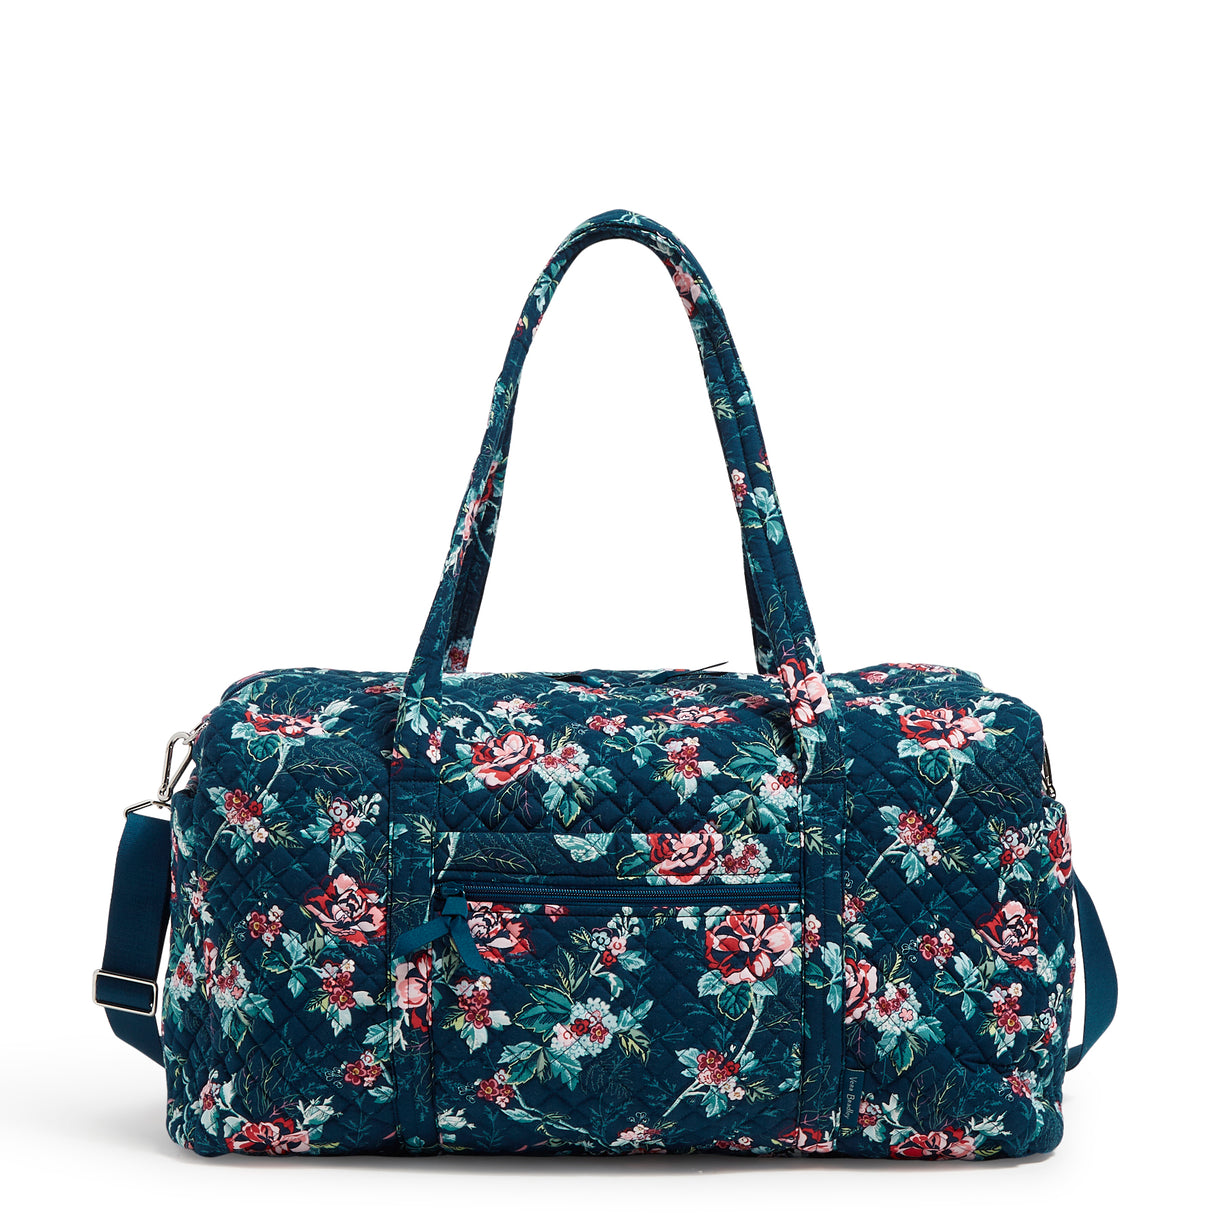 Large travel duffel bag in Rose Toile pattern